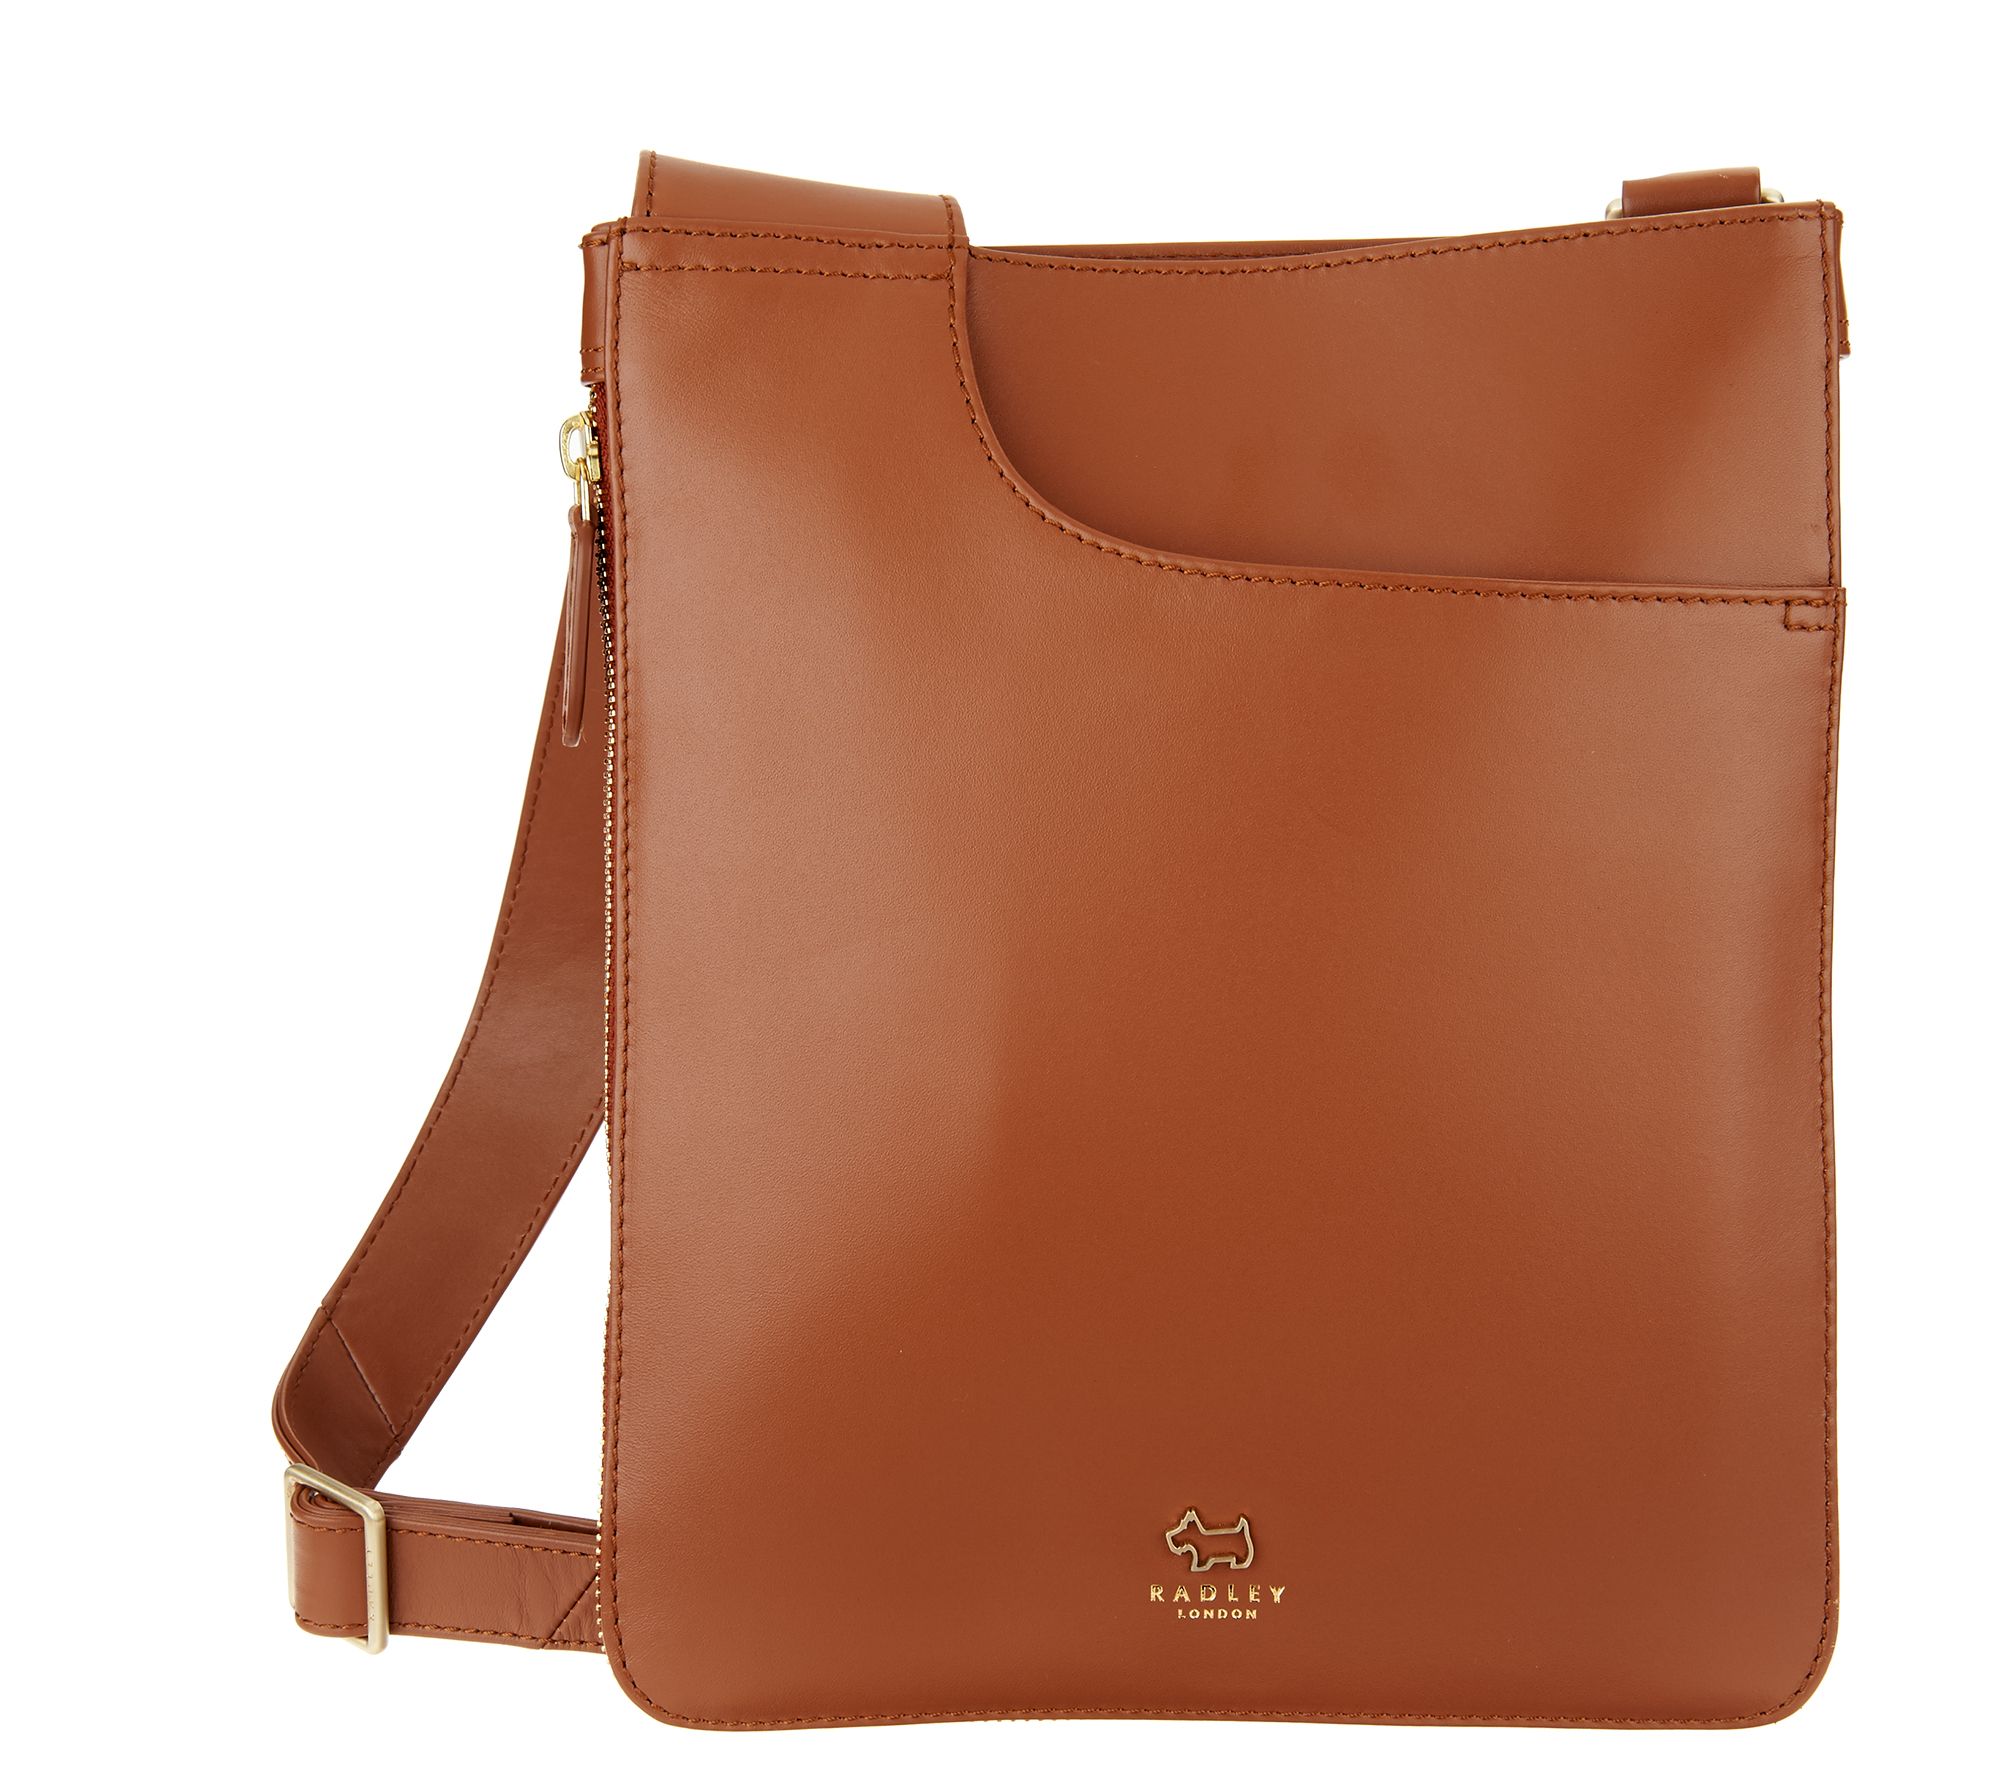 RADLEY London Medium Pockets Leather Crossbody Handbag 